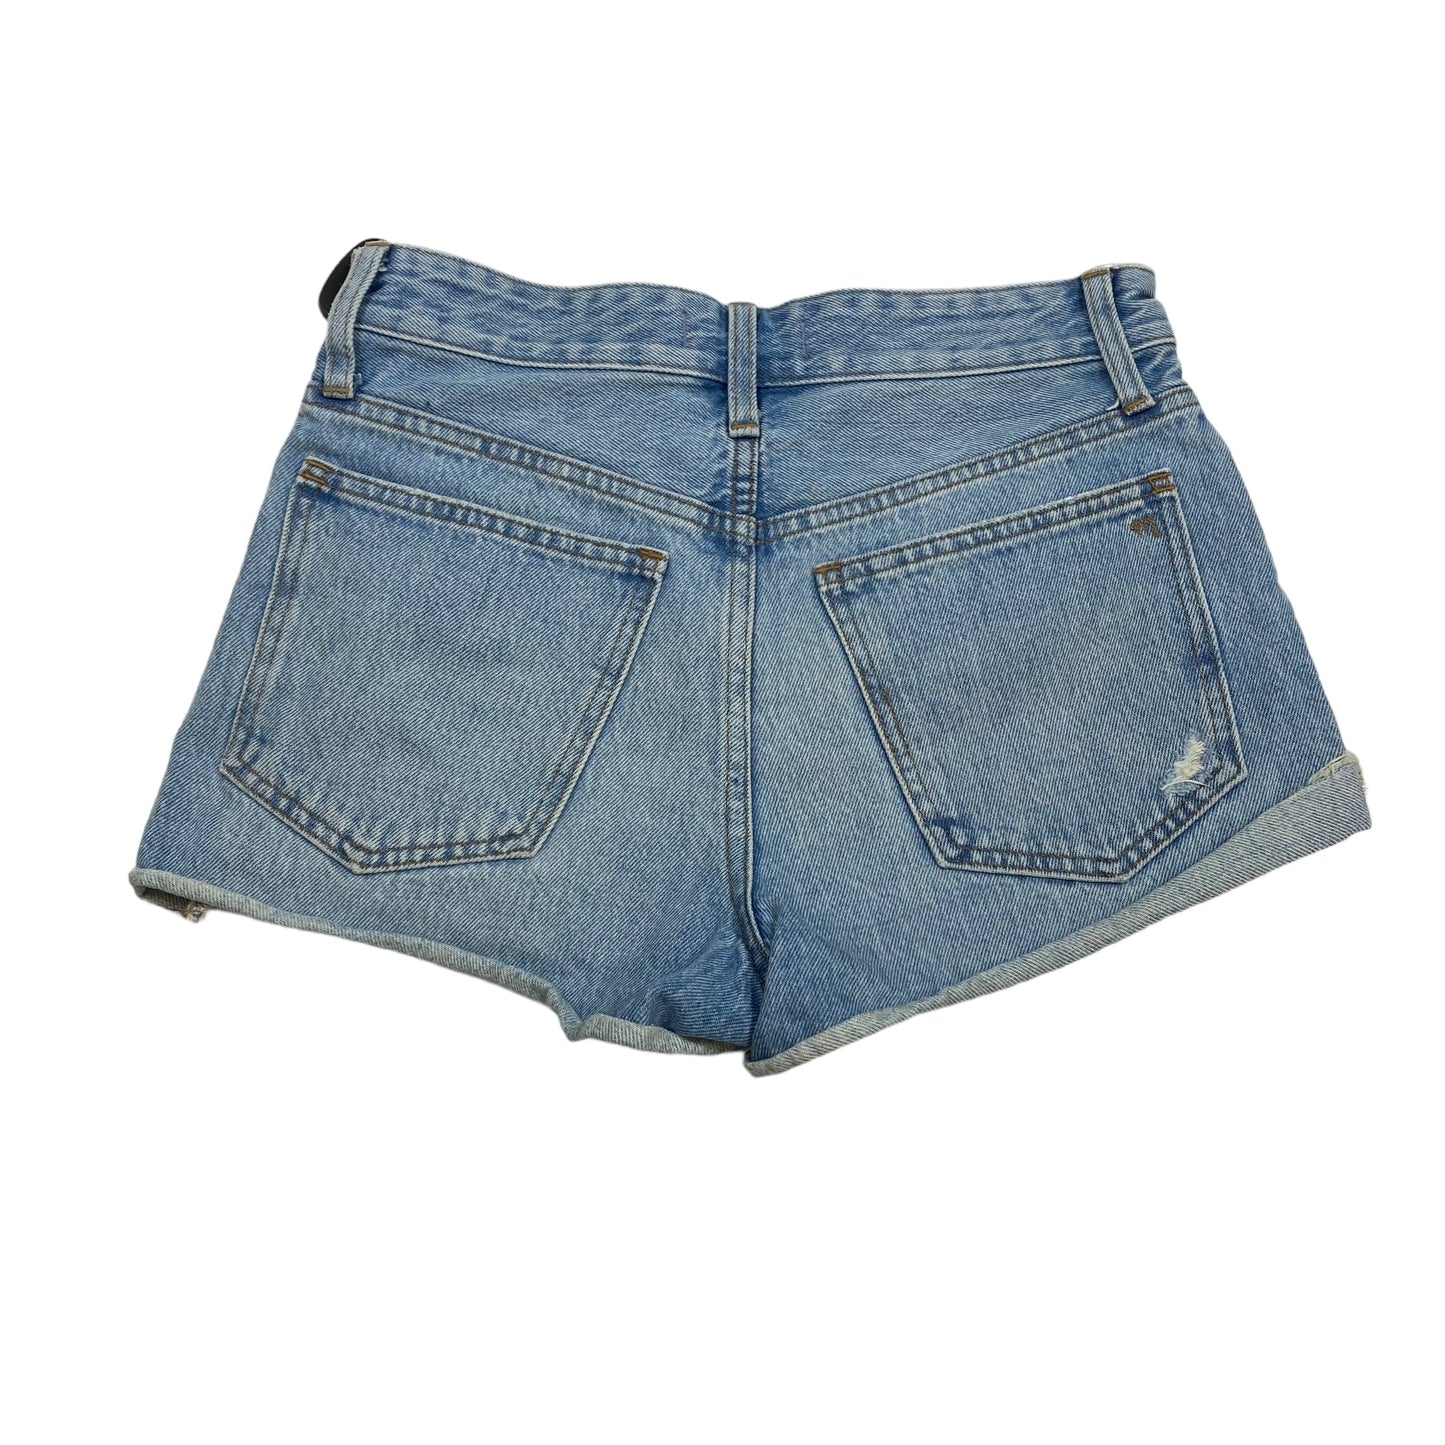 Blue Denim Shorts Madewell, Size 00